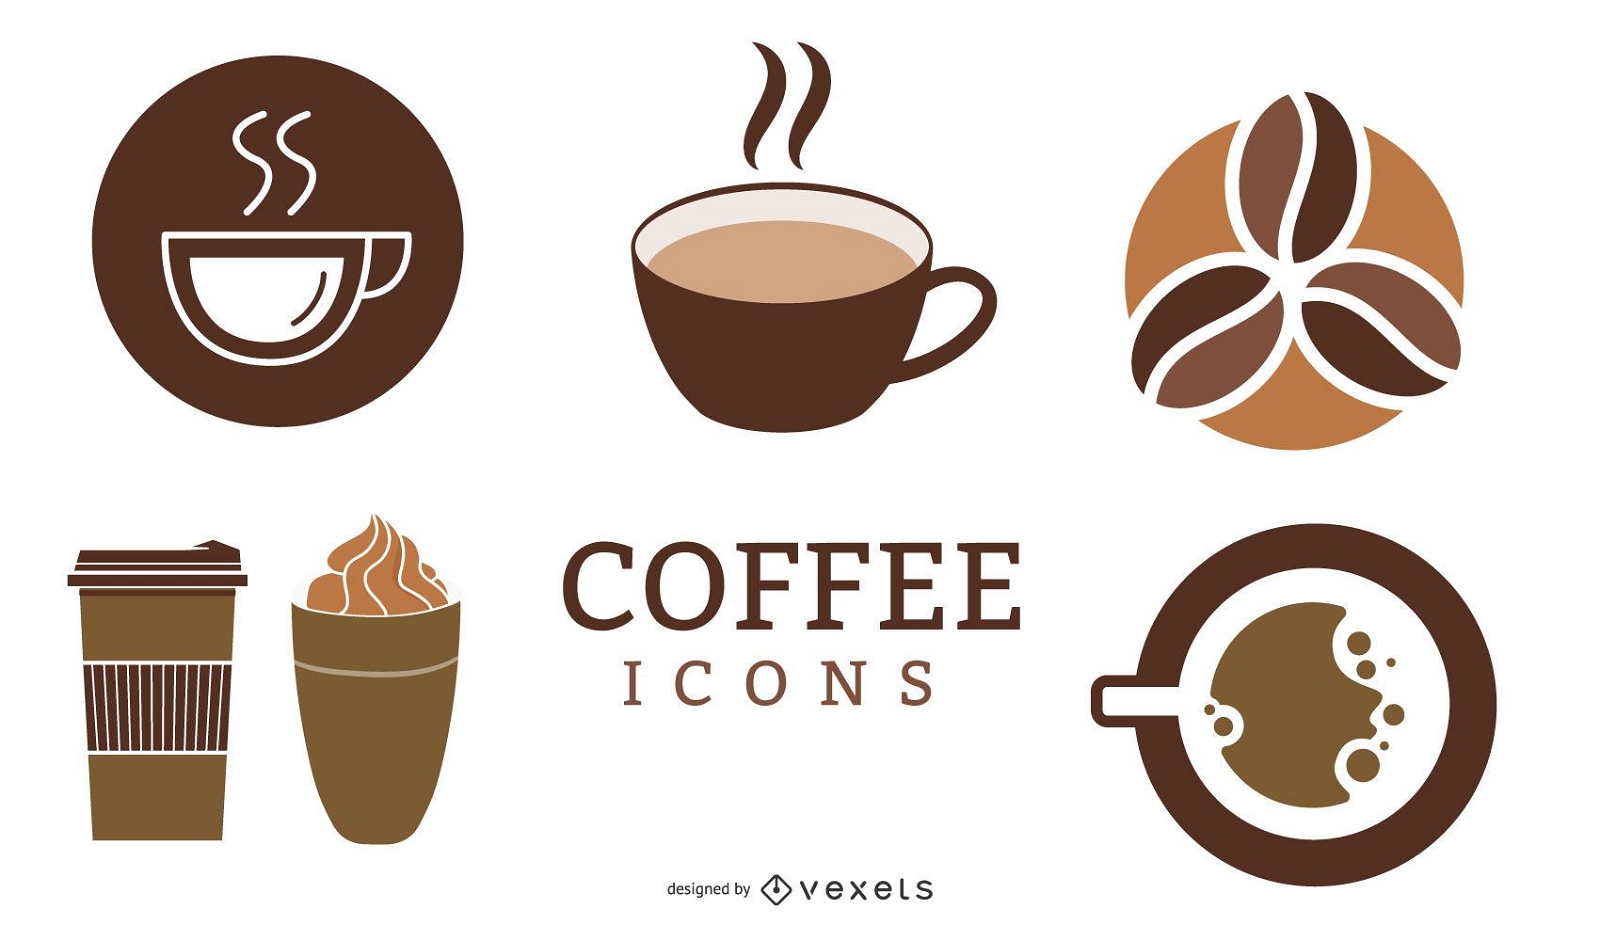 Minimal Coffee Icons Pack